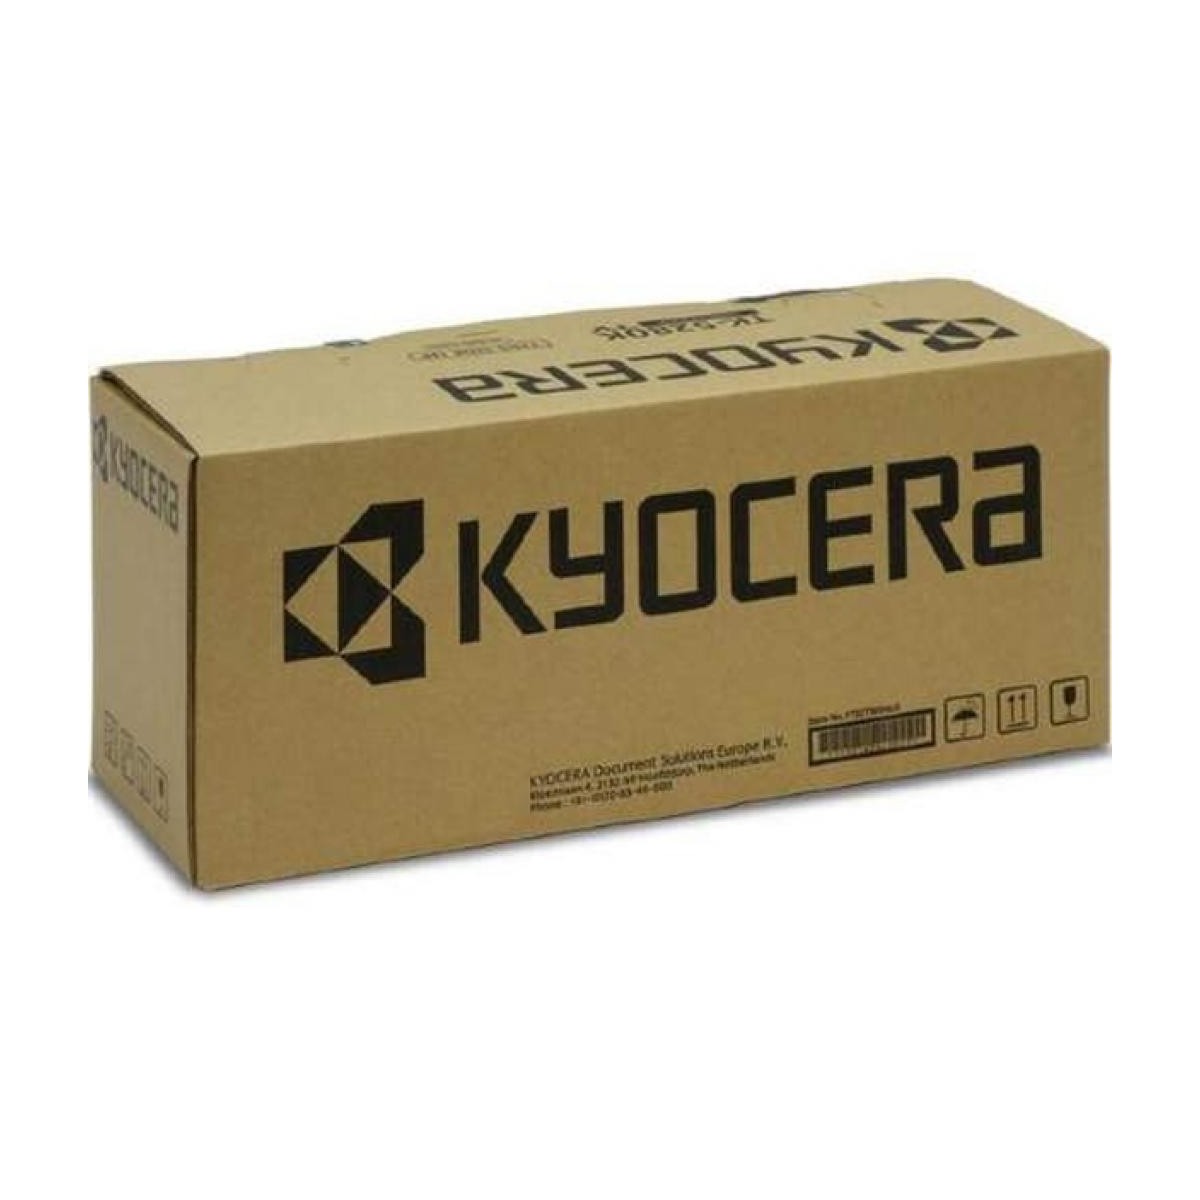 Kyocera DK-3100 - Original - Kyocera - FS-2100D / FS-2100DN / ECOSYS M3040dn / ECOSYS M3540dn - 1 pc(s) - 300000 pages - Laser p